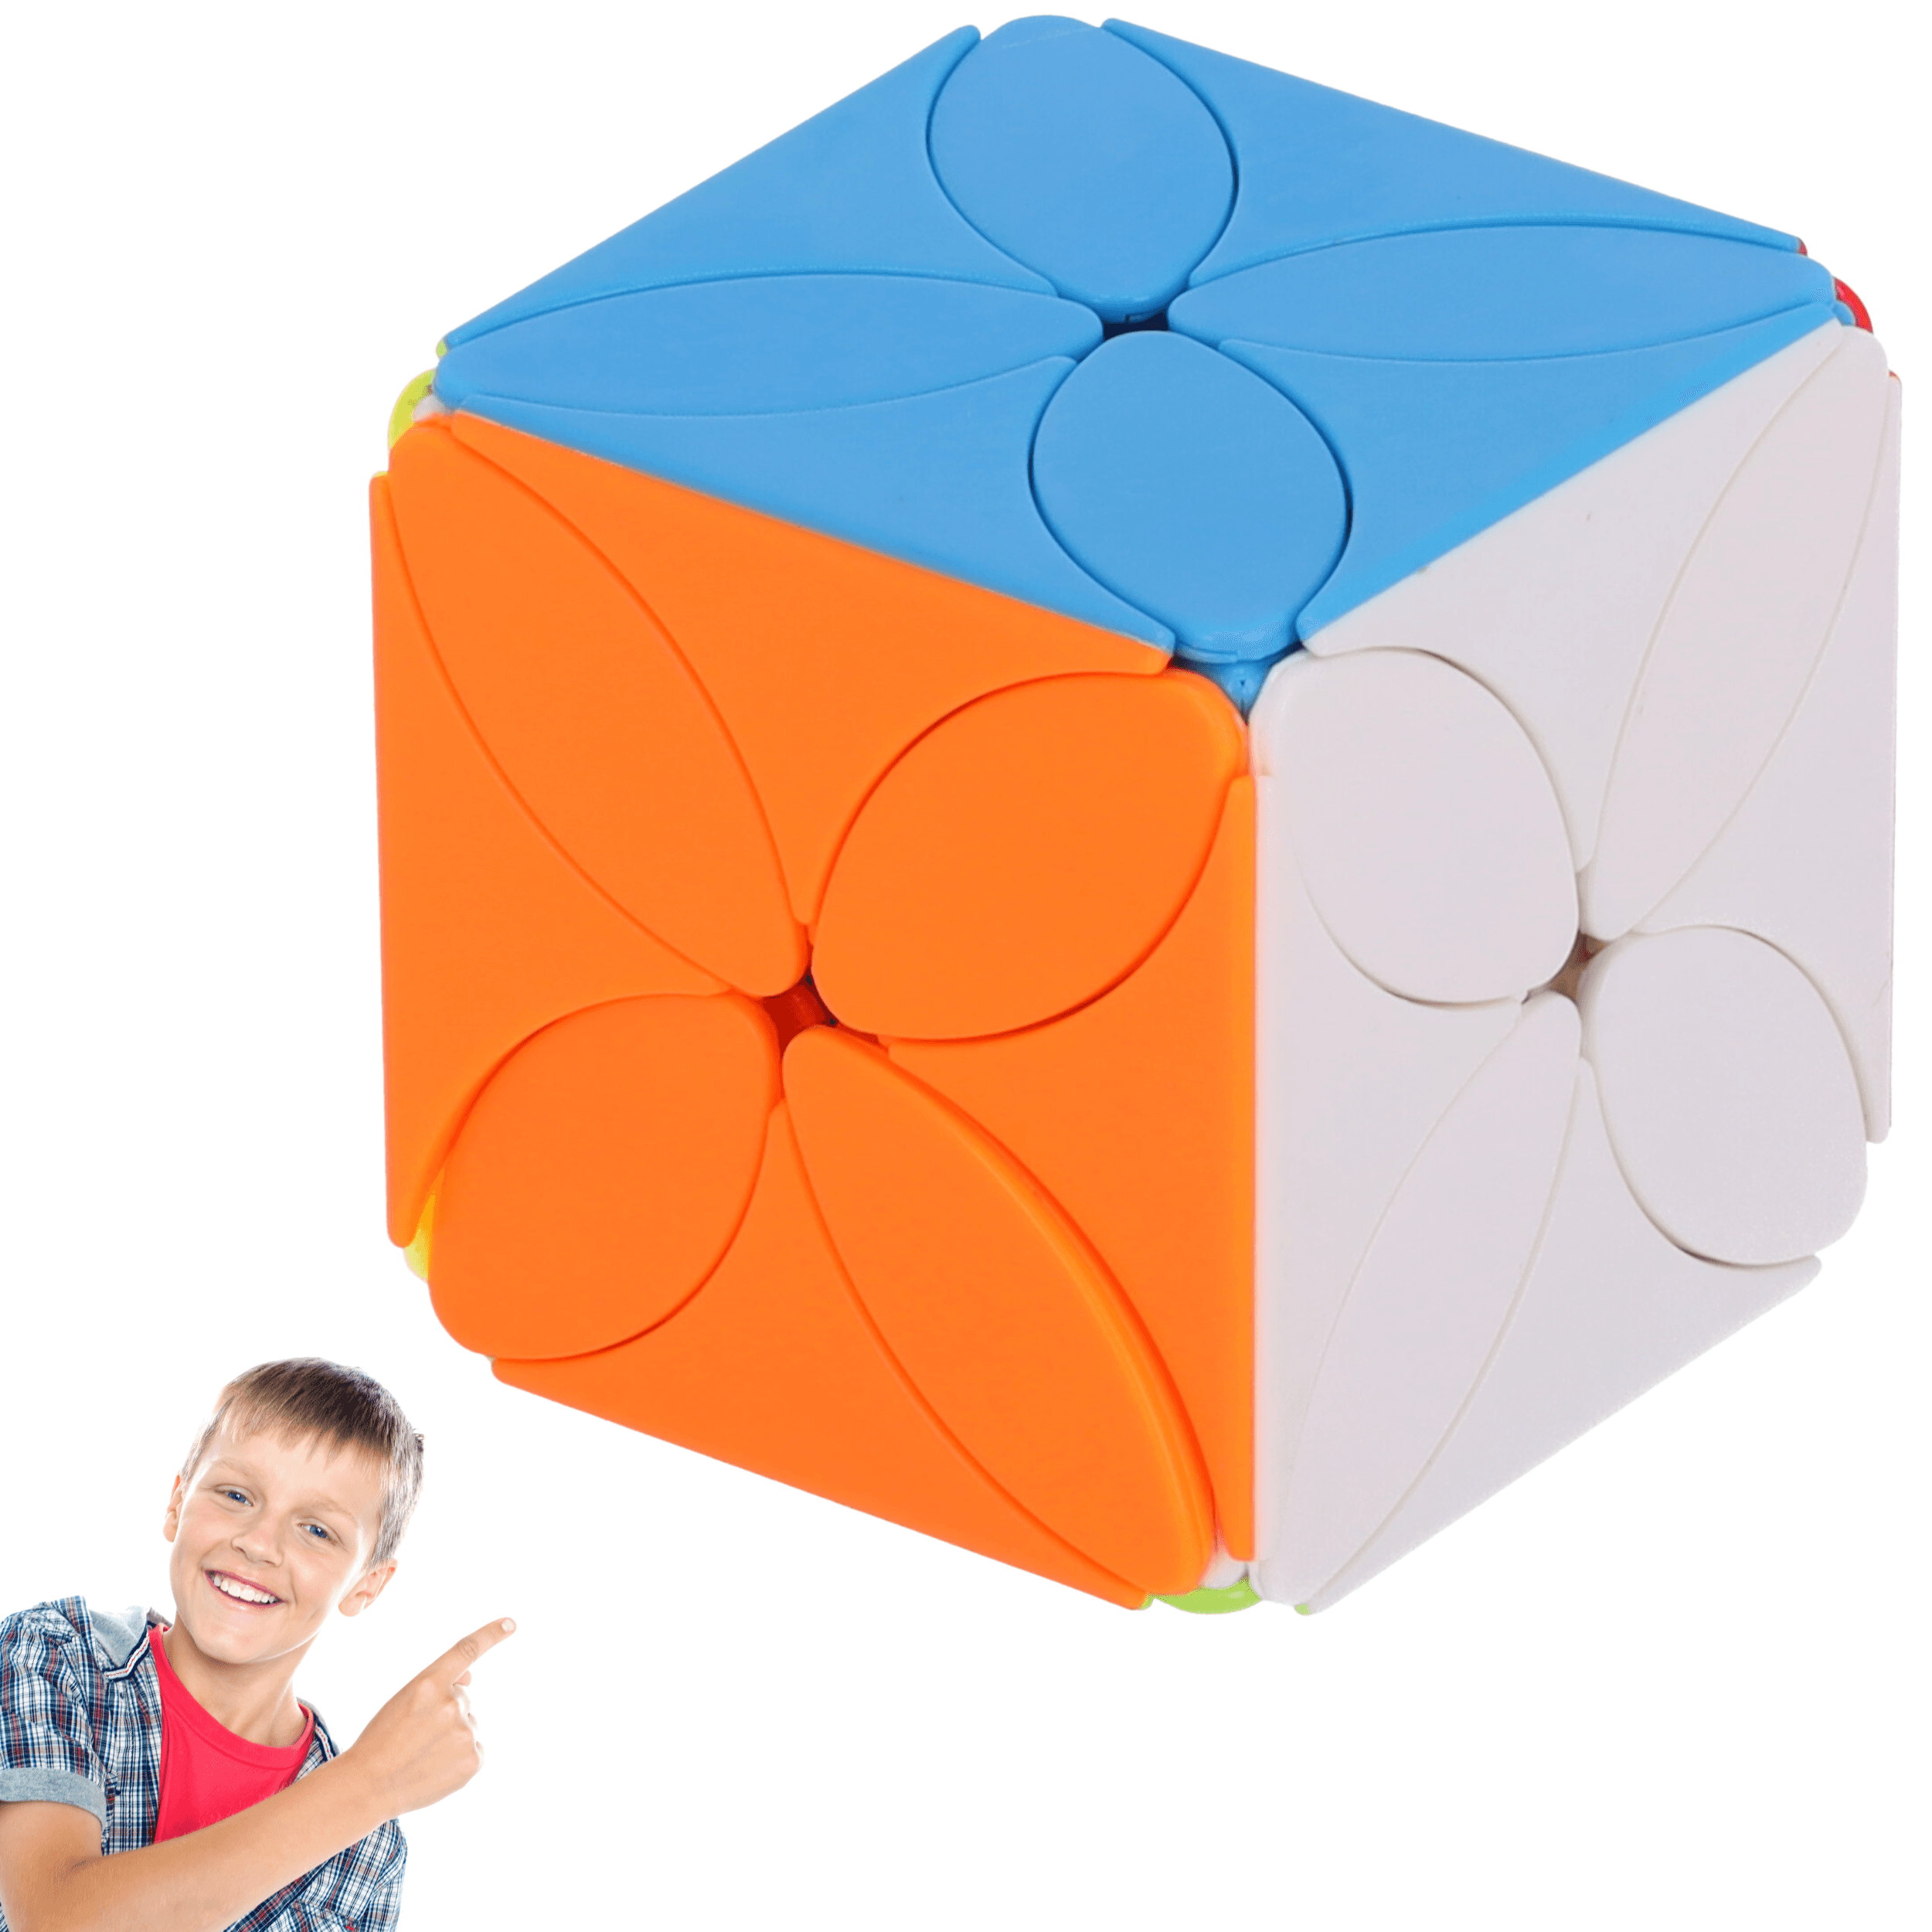 Modern jigsaw puzzle, logic cube, Rubik's Cube - Leaf Clover's, type II